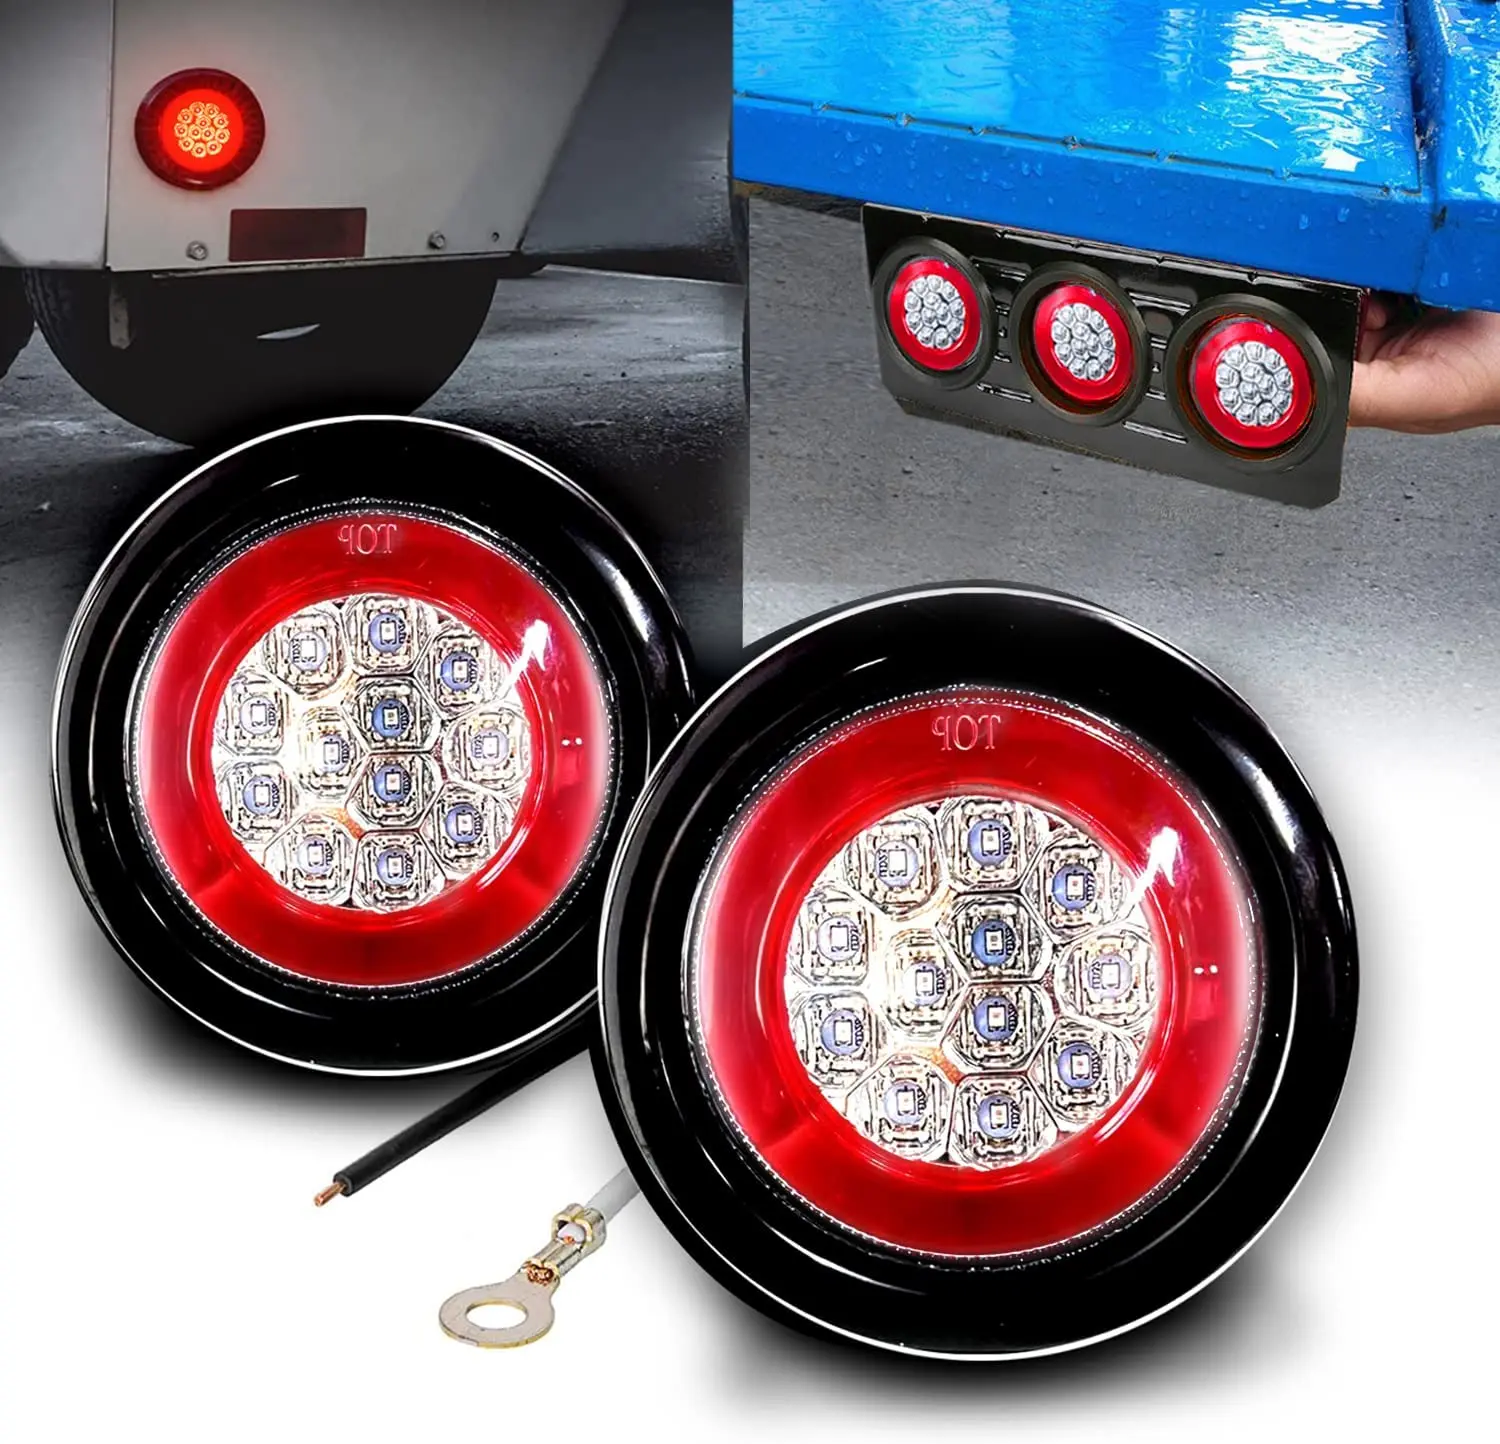 

5" Round LED Trailer Tail Lights Running Stop Brake Lighting Waterproof lamp Taillight 12V for Truck Boat Van Caravan Snowmobile